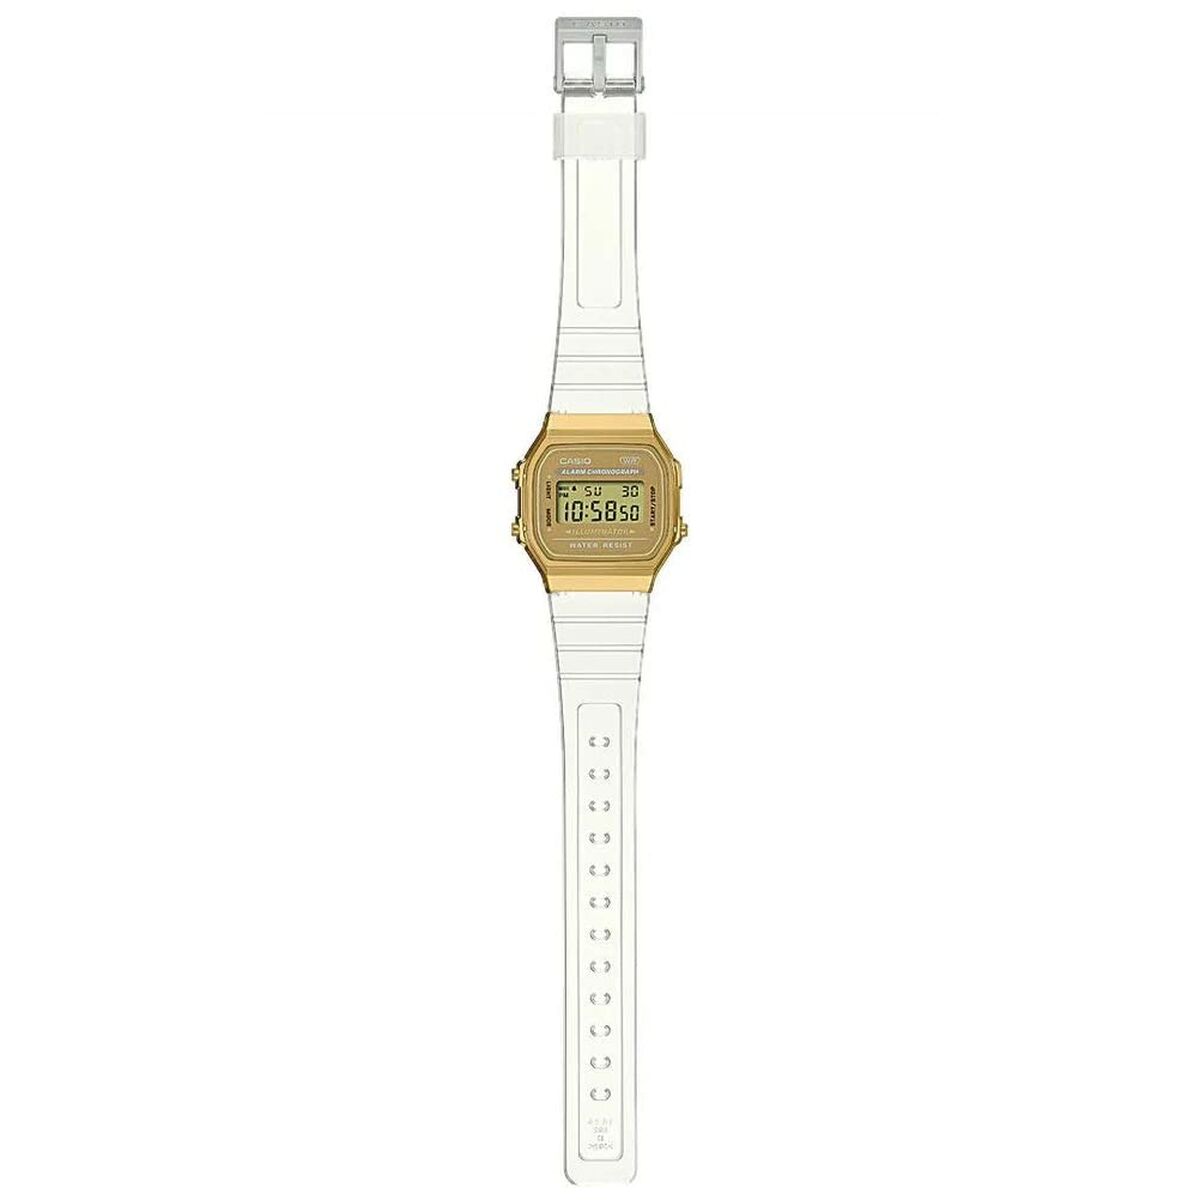 Kaufe Unisex-Uhr Casio VINTAGE COLLECTION - TRANSPARENT BAND - GOLD (Ø 36 mm) bei AWK Flagship um € 90.00